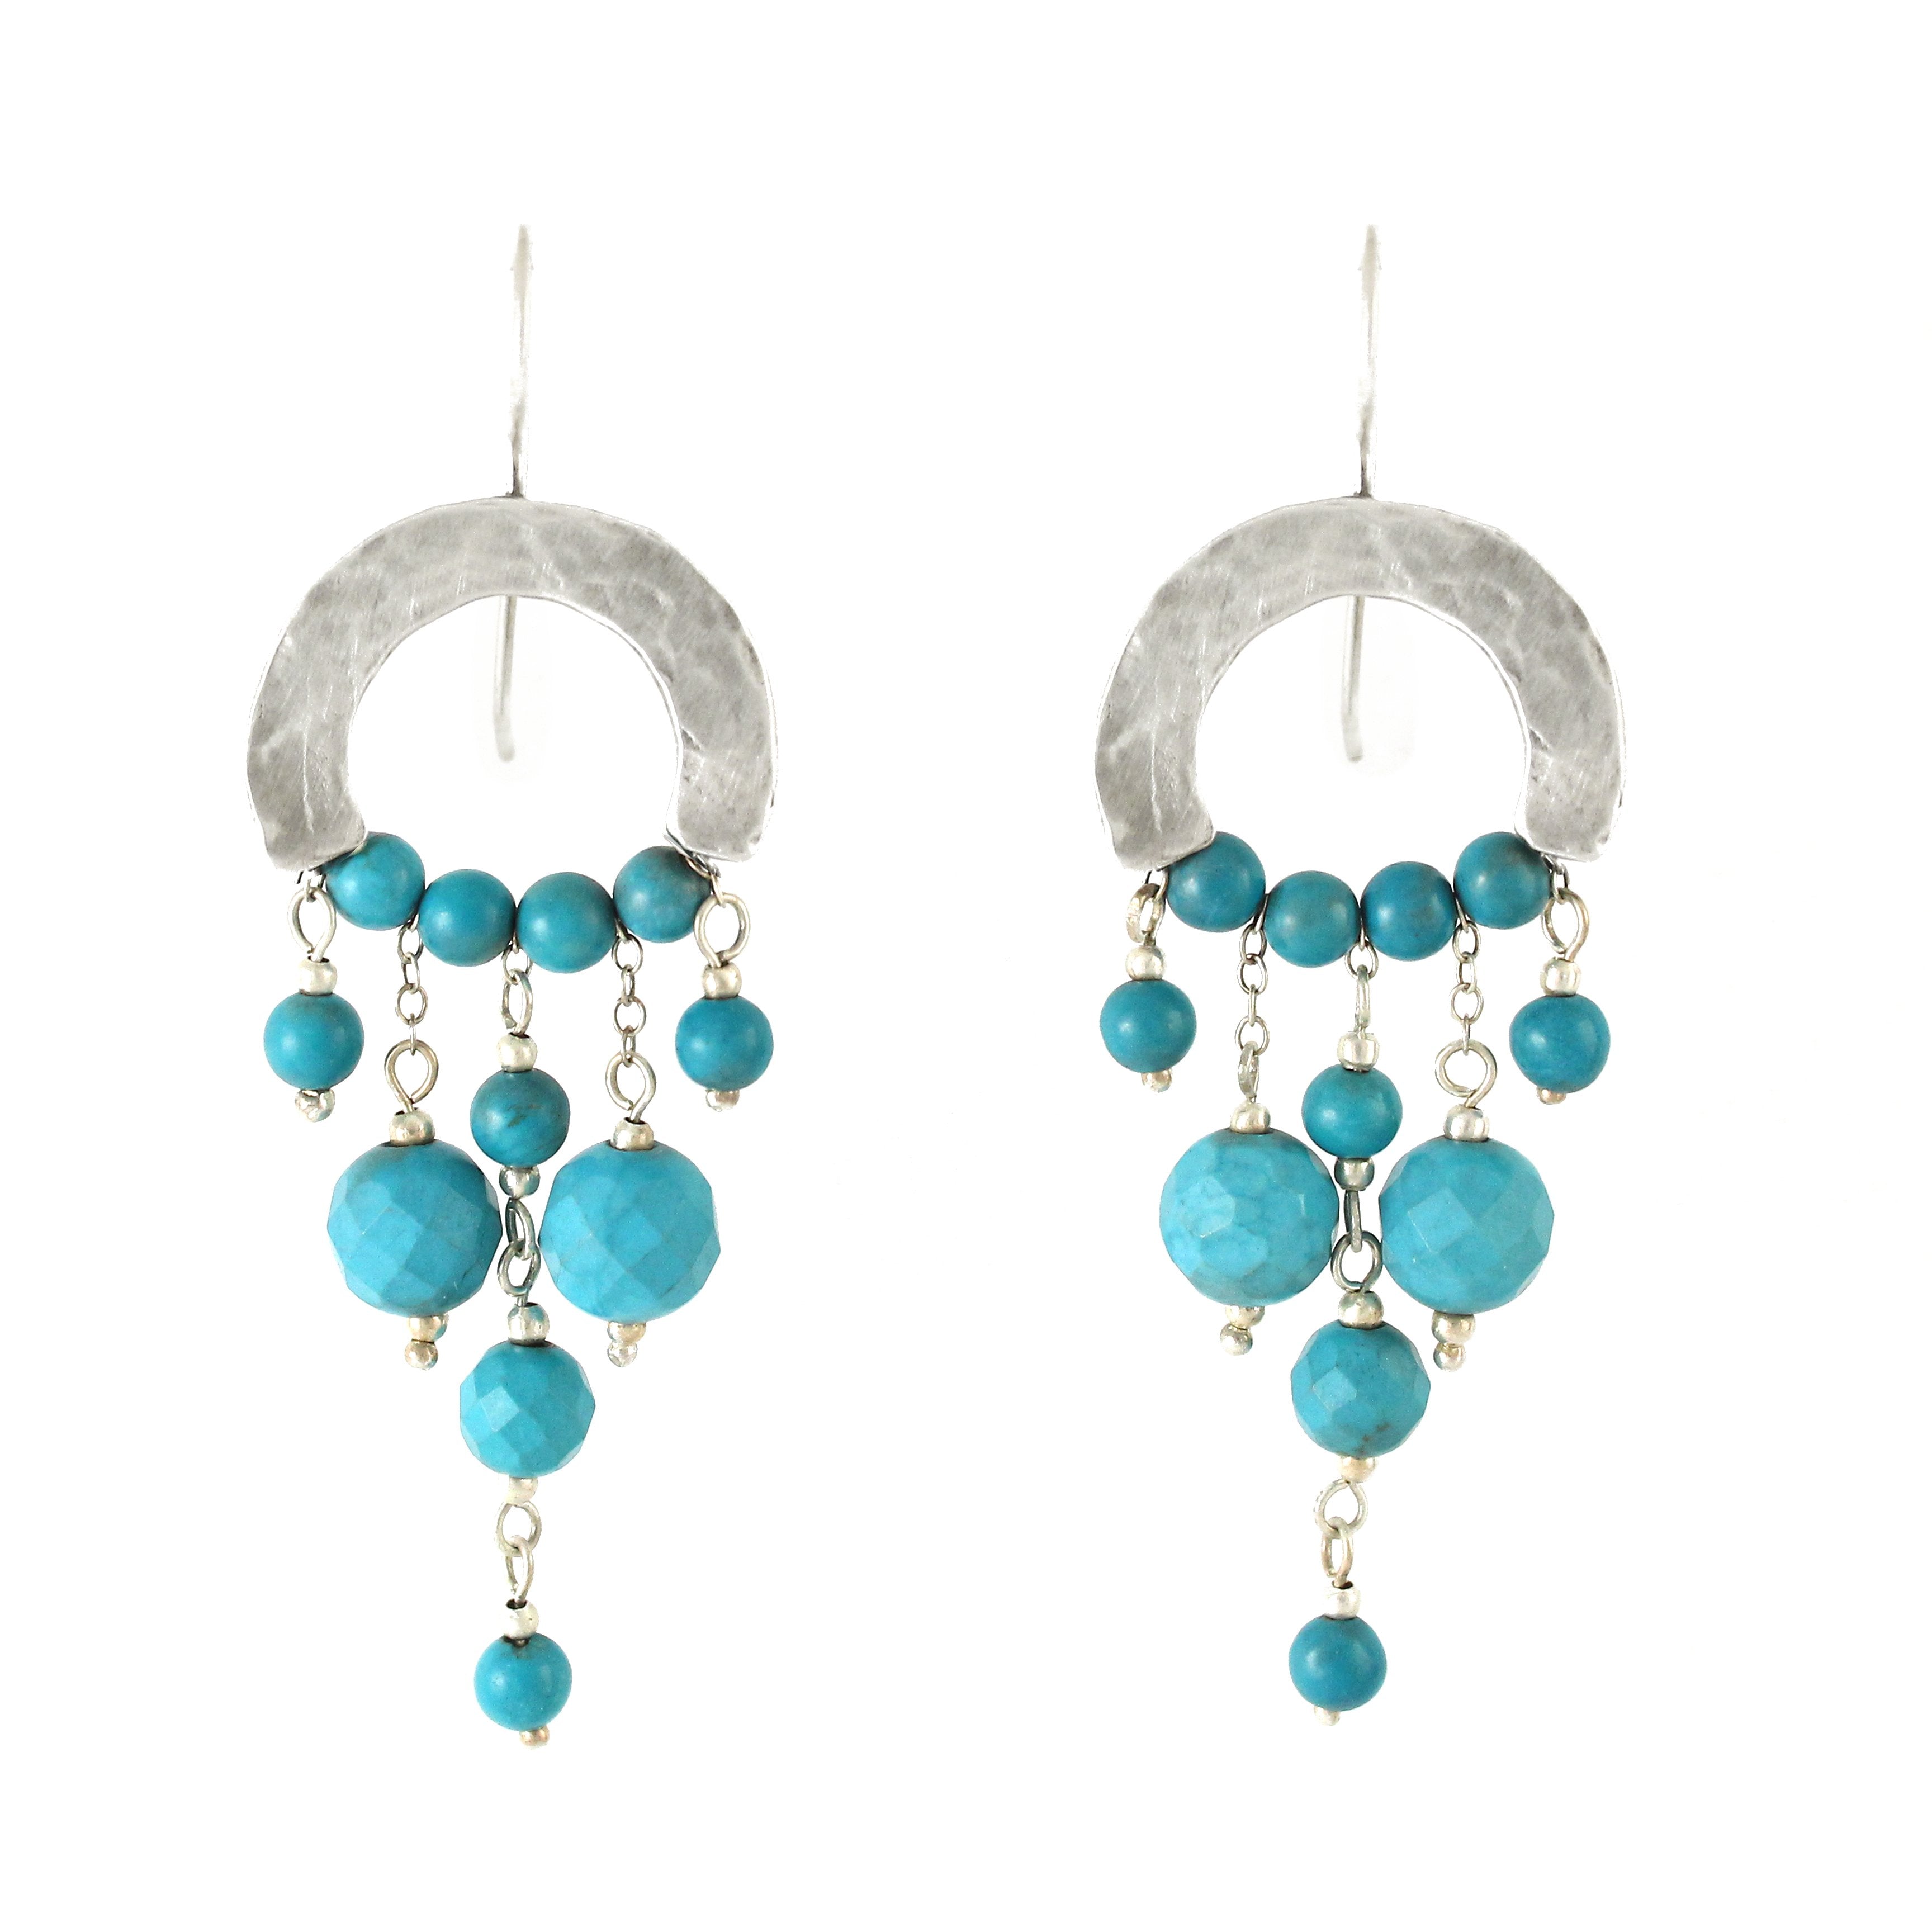 Elegant Bohemian Style Silver & Turquoise Gemstones Large Earrings - Shulamit Kanter